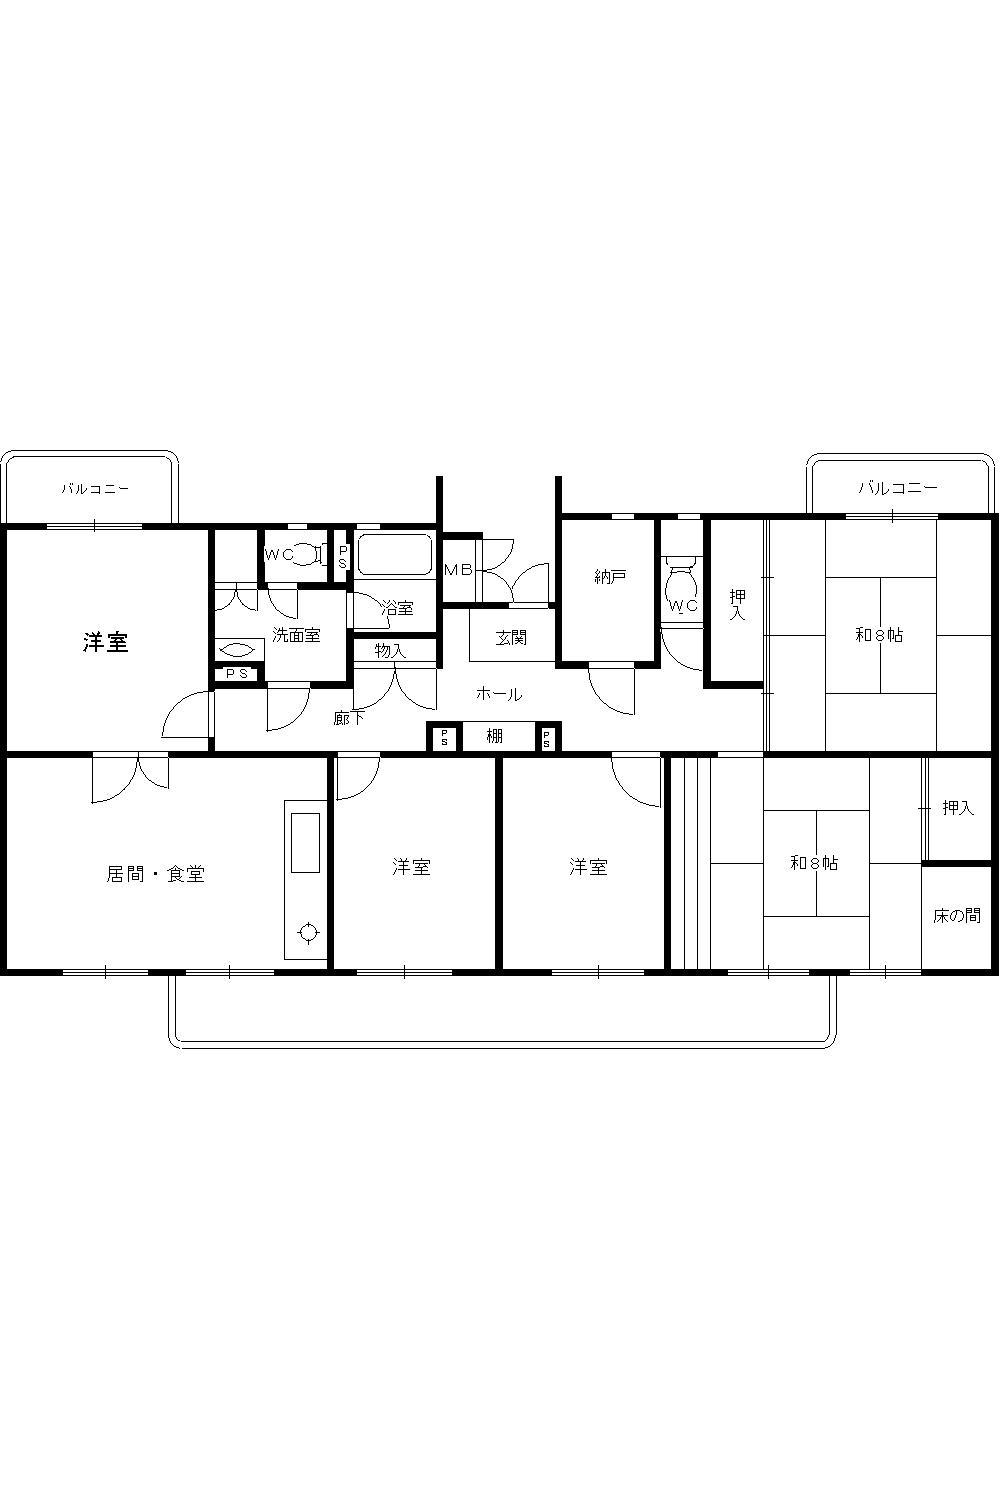 Floor plan. 5LDK + S (storeroom), Price 12 million yen, Footprint 118.45 sq m , Balcony area 18.11 sq m